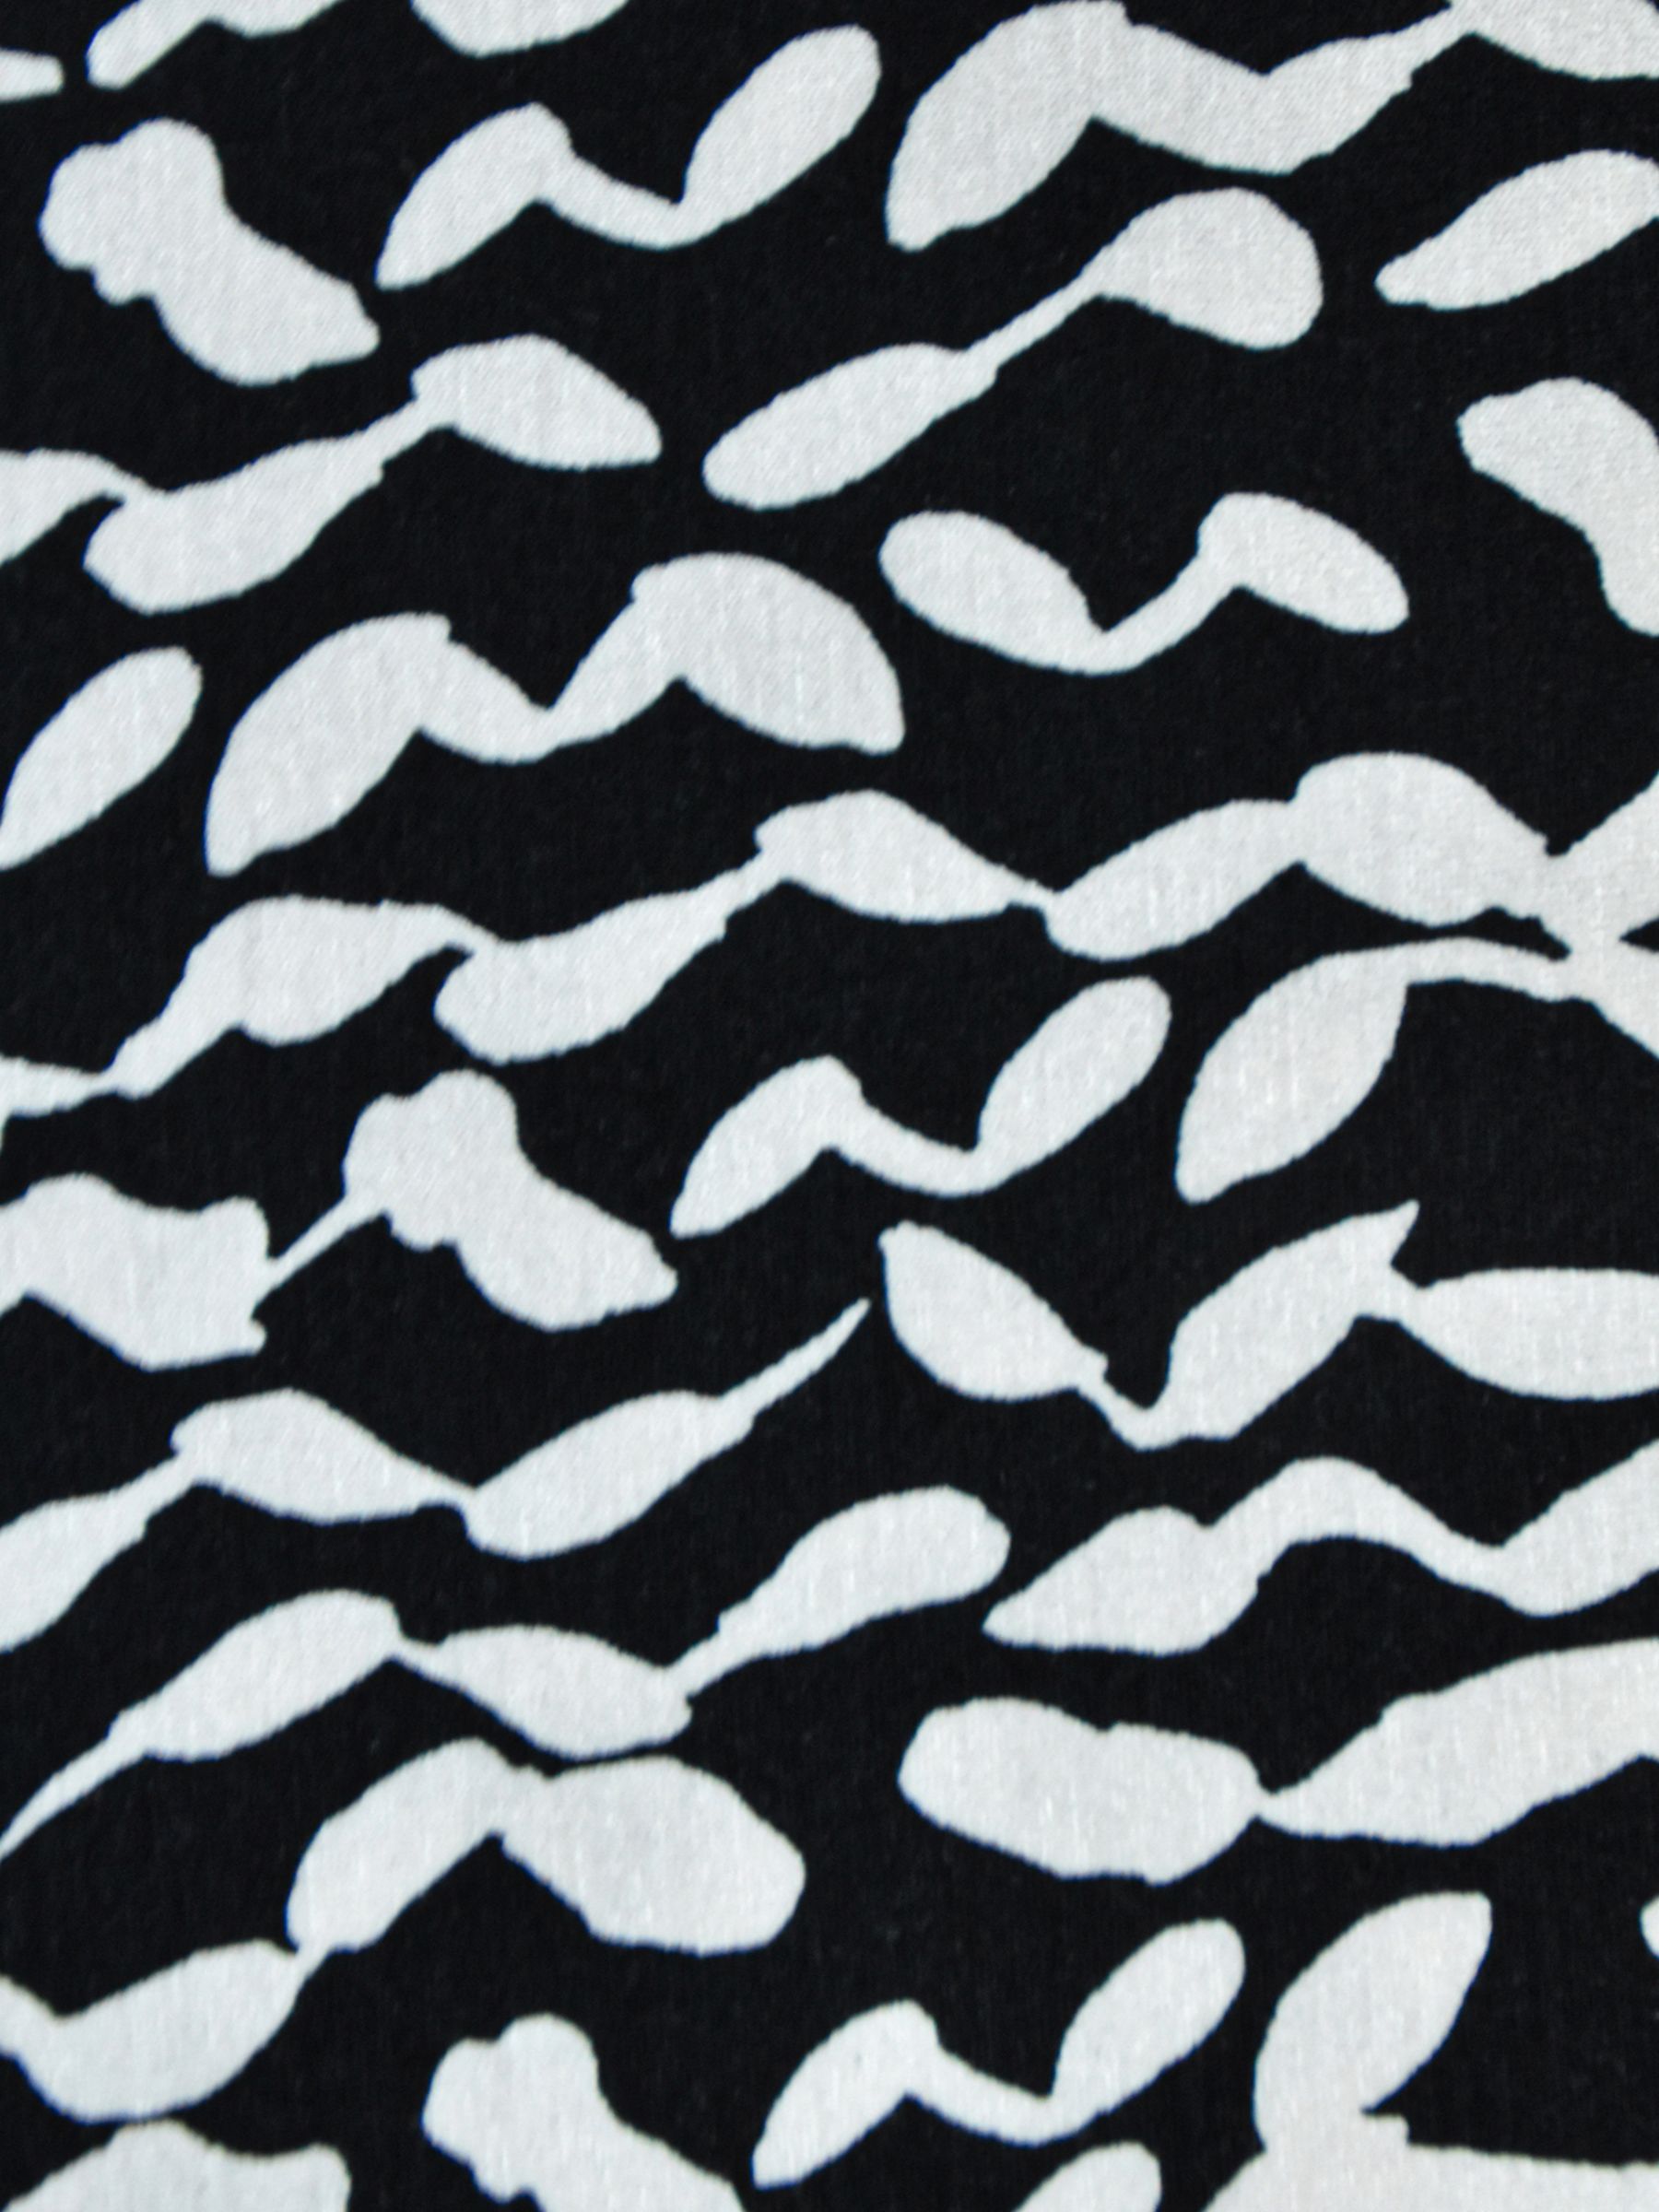 Buy Live Unlimited Curve Mono Jersey Short Sleeve Midi Dress, Black Online at johnlewis.com